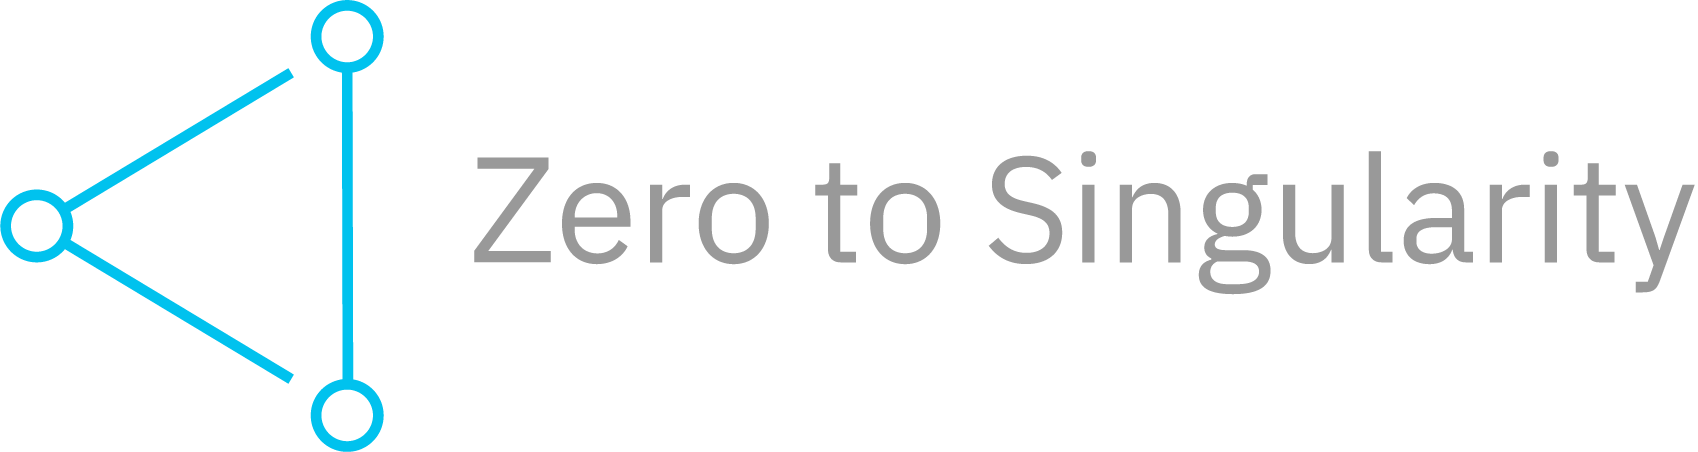 Zero to Singularity - Practical deep learing Logo